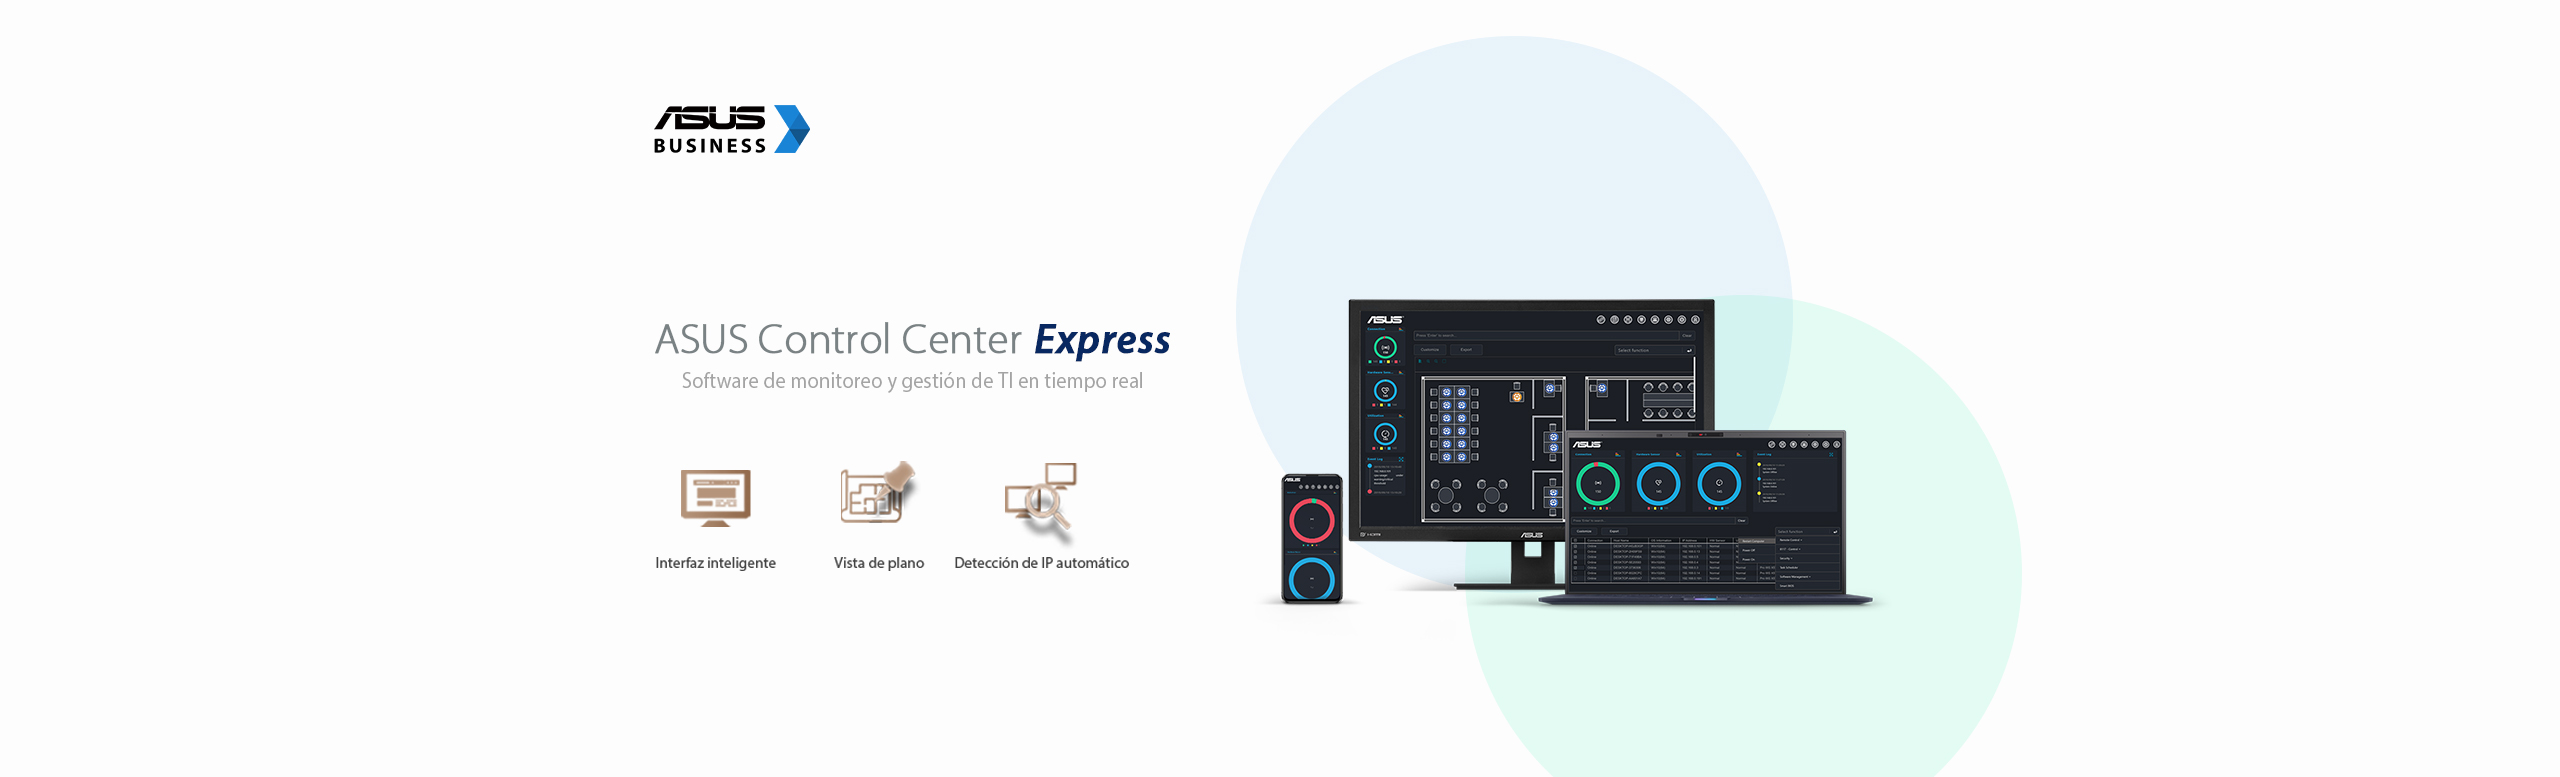 ASUS Control Center Express